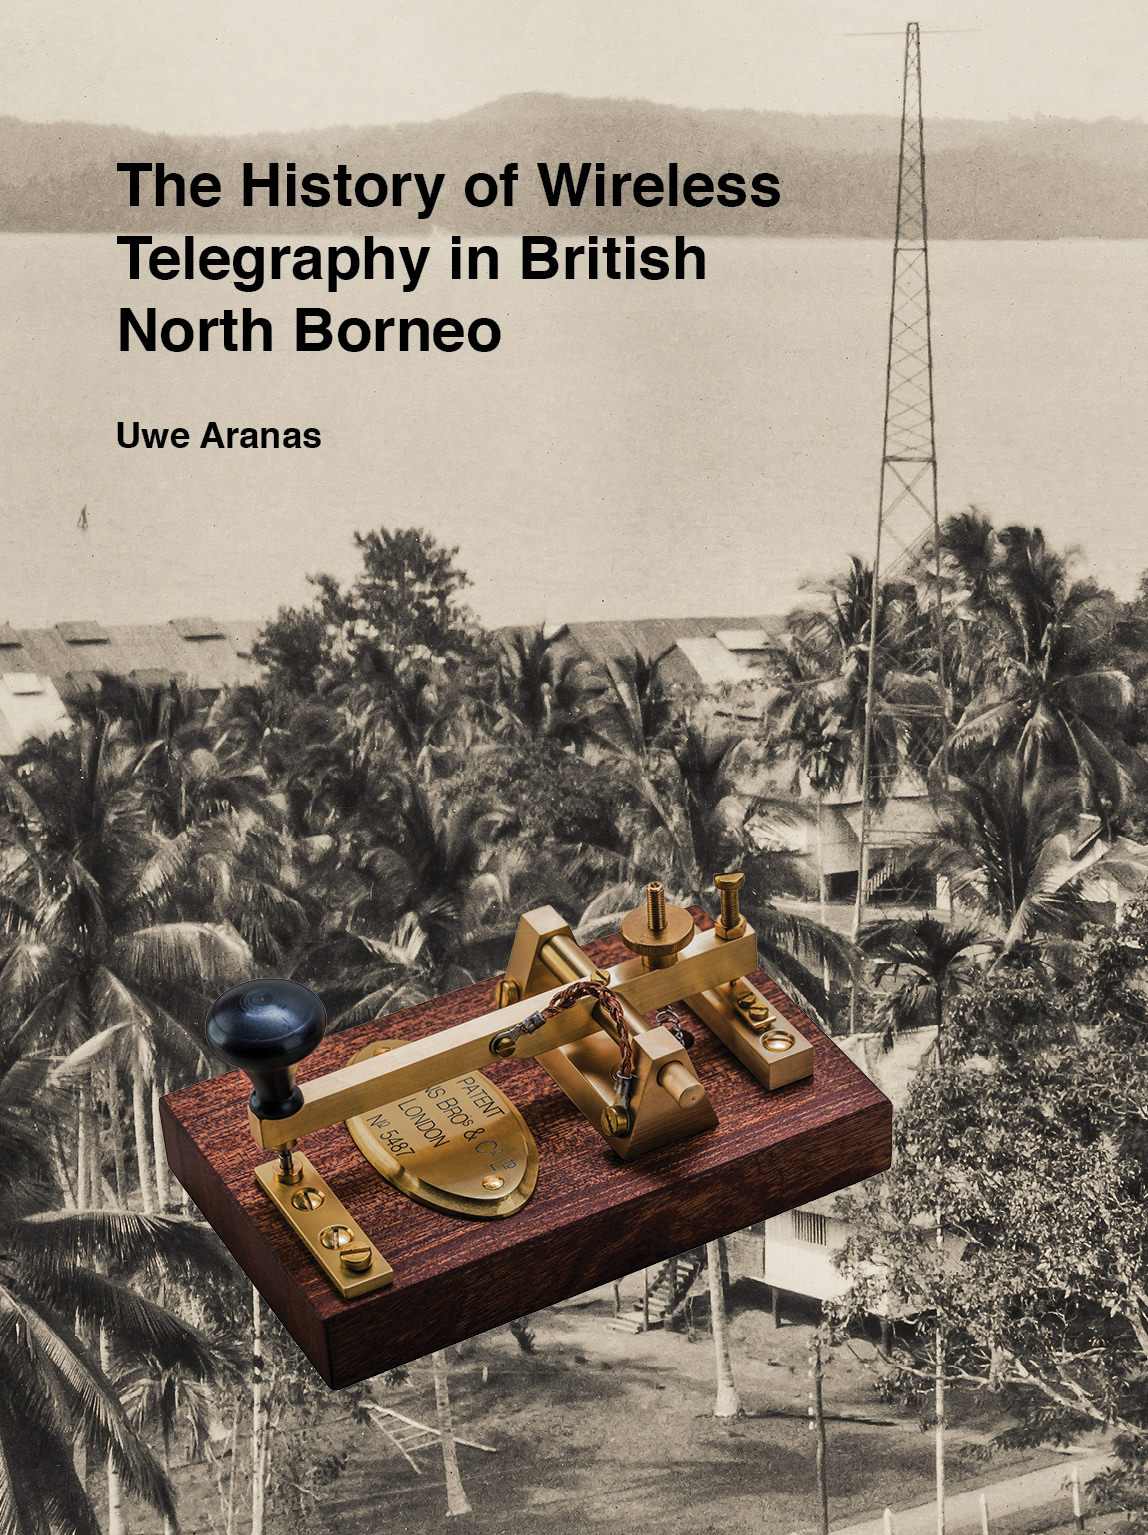 The History of Wireless Telegraphy in British North Borneo